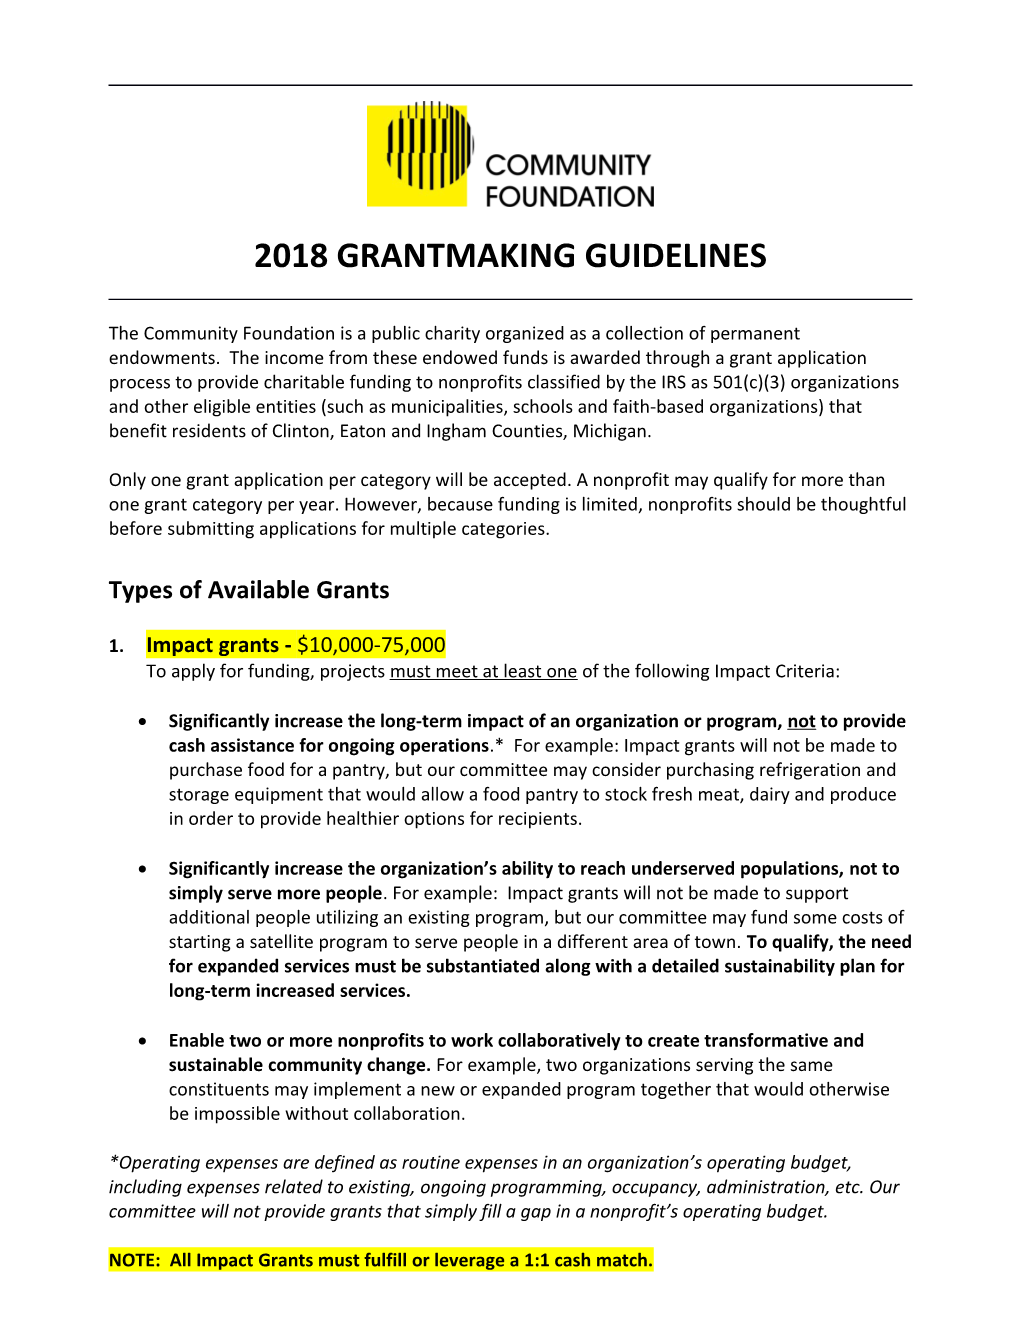 2018 Grantmaking Guidelines